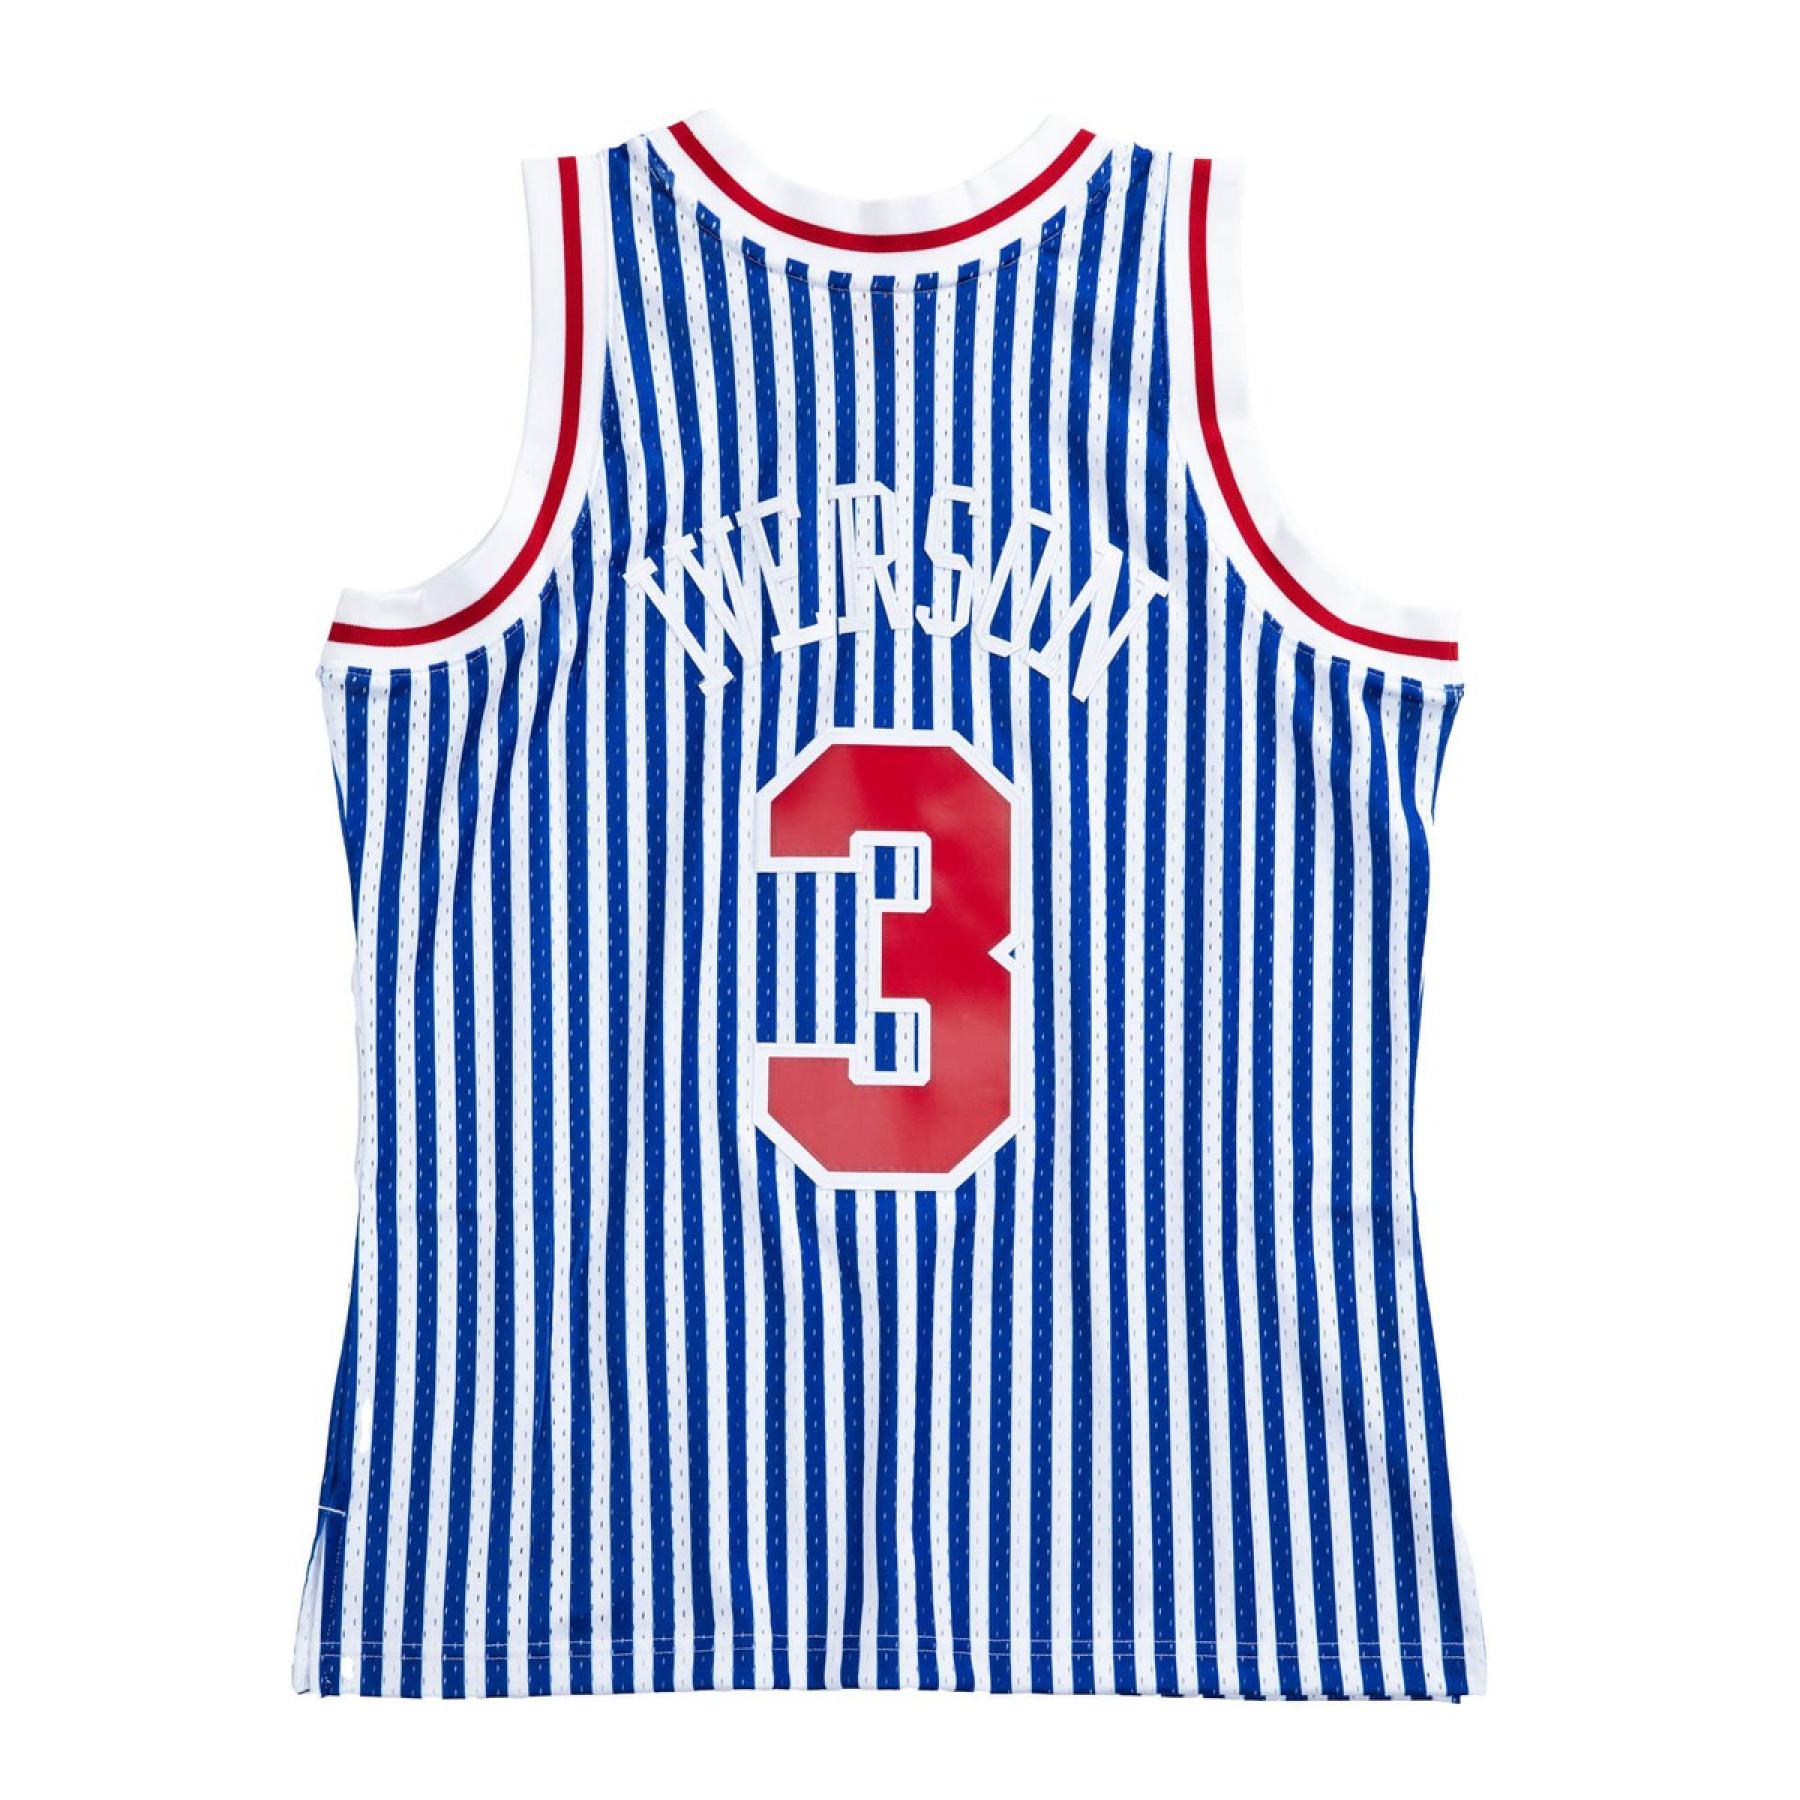 Maillot Philadelphia 76ers striped